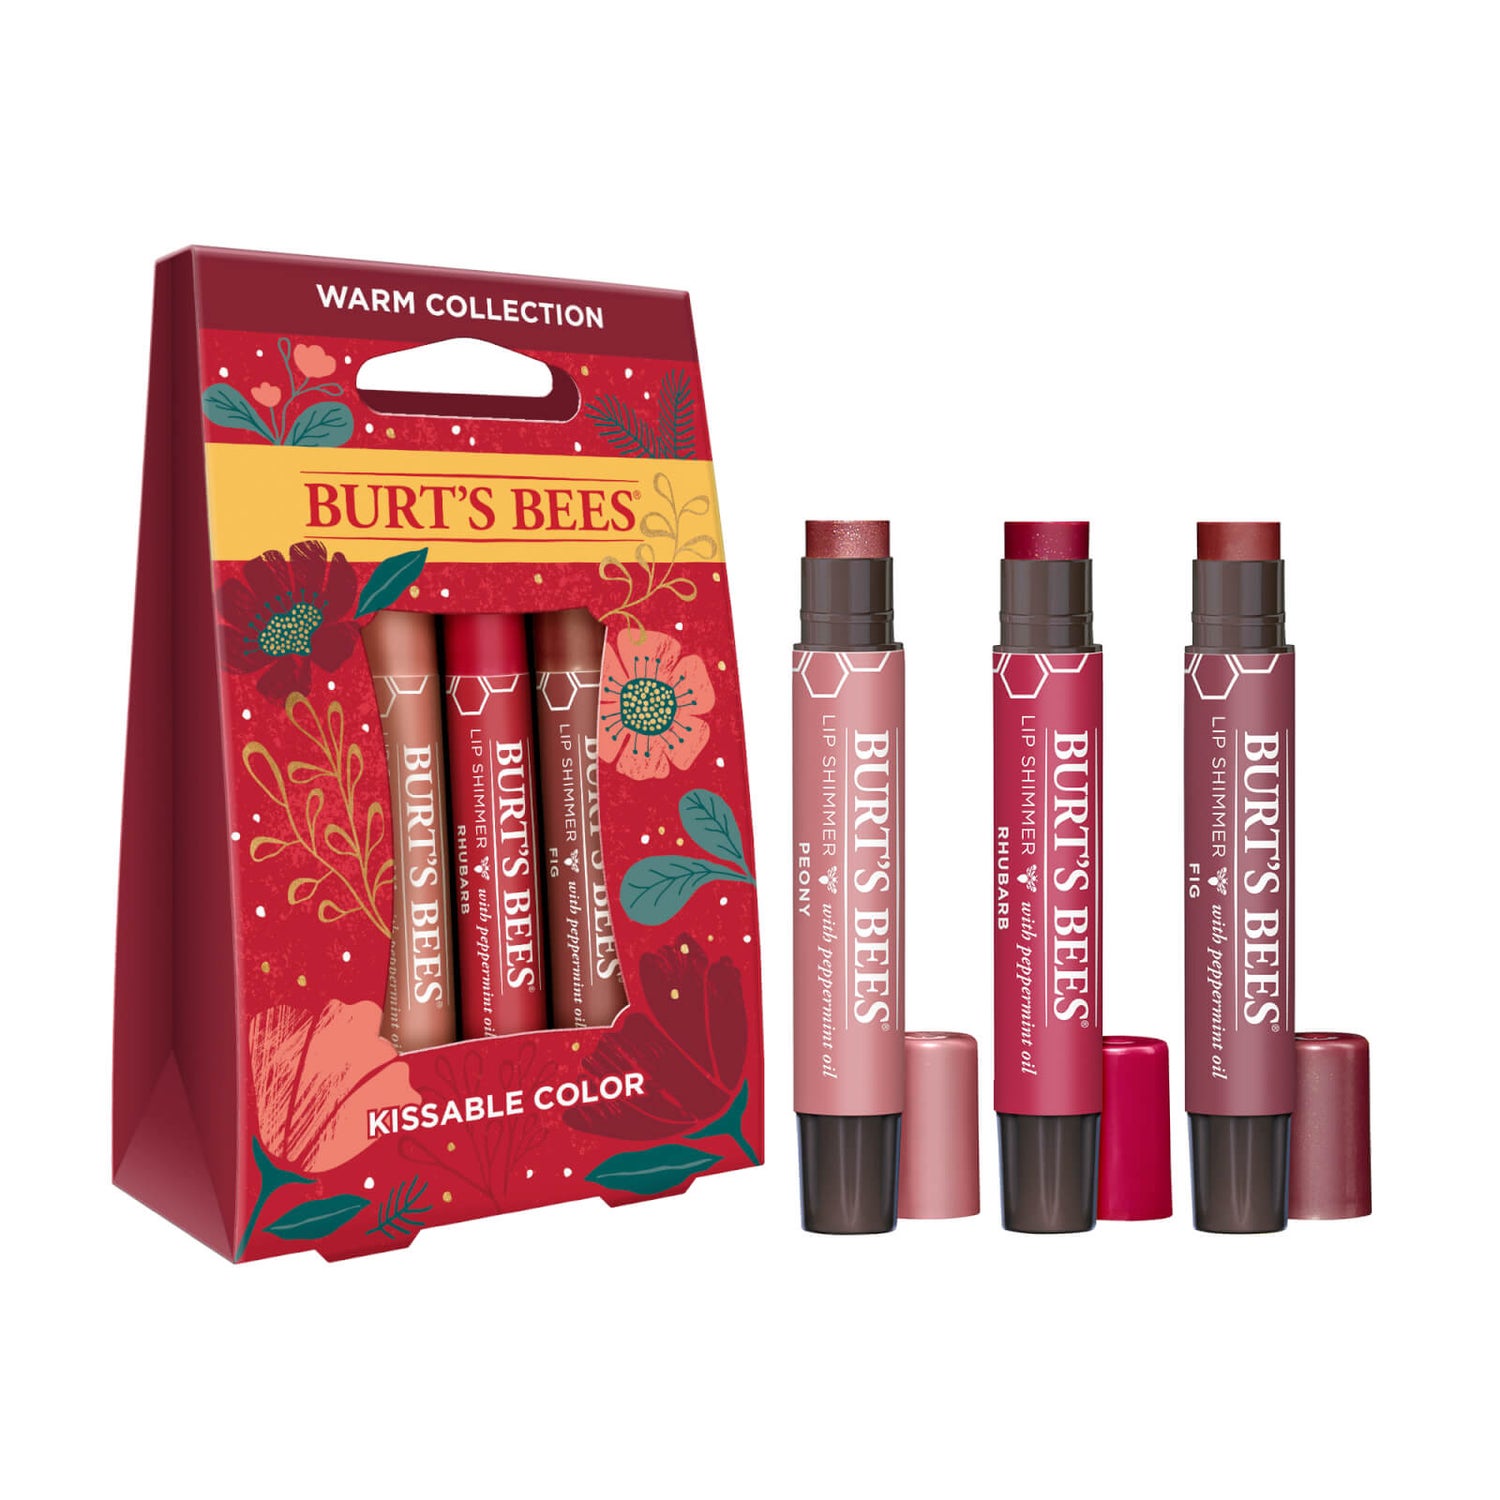 Burt's Bees Kissable Colour Holiday Gift Set(버츠비 키서블 컬러 홀리데이 기프트 세트)